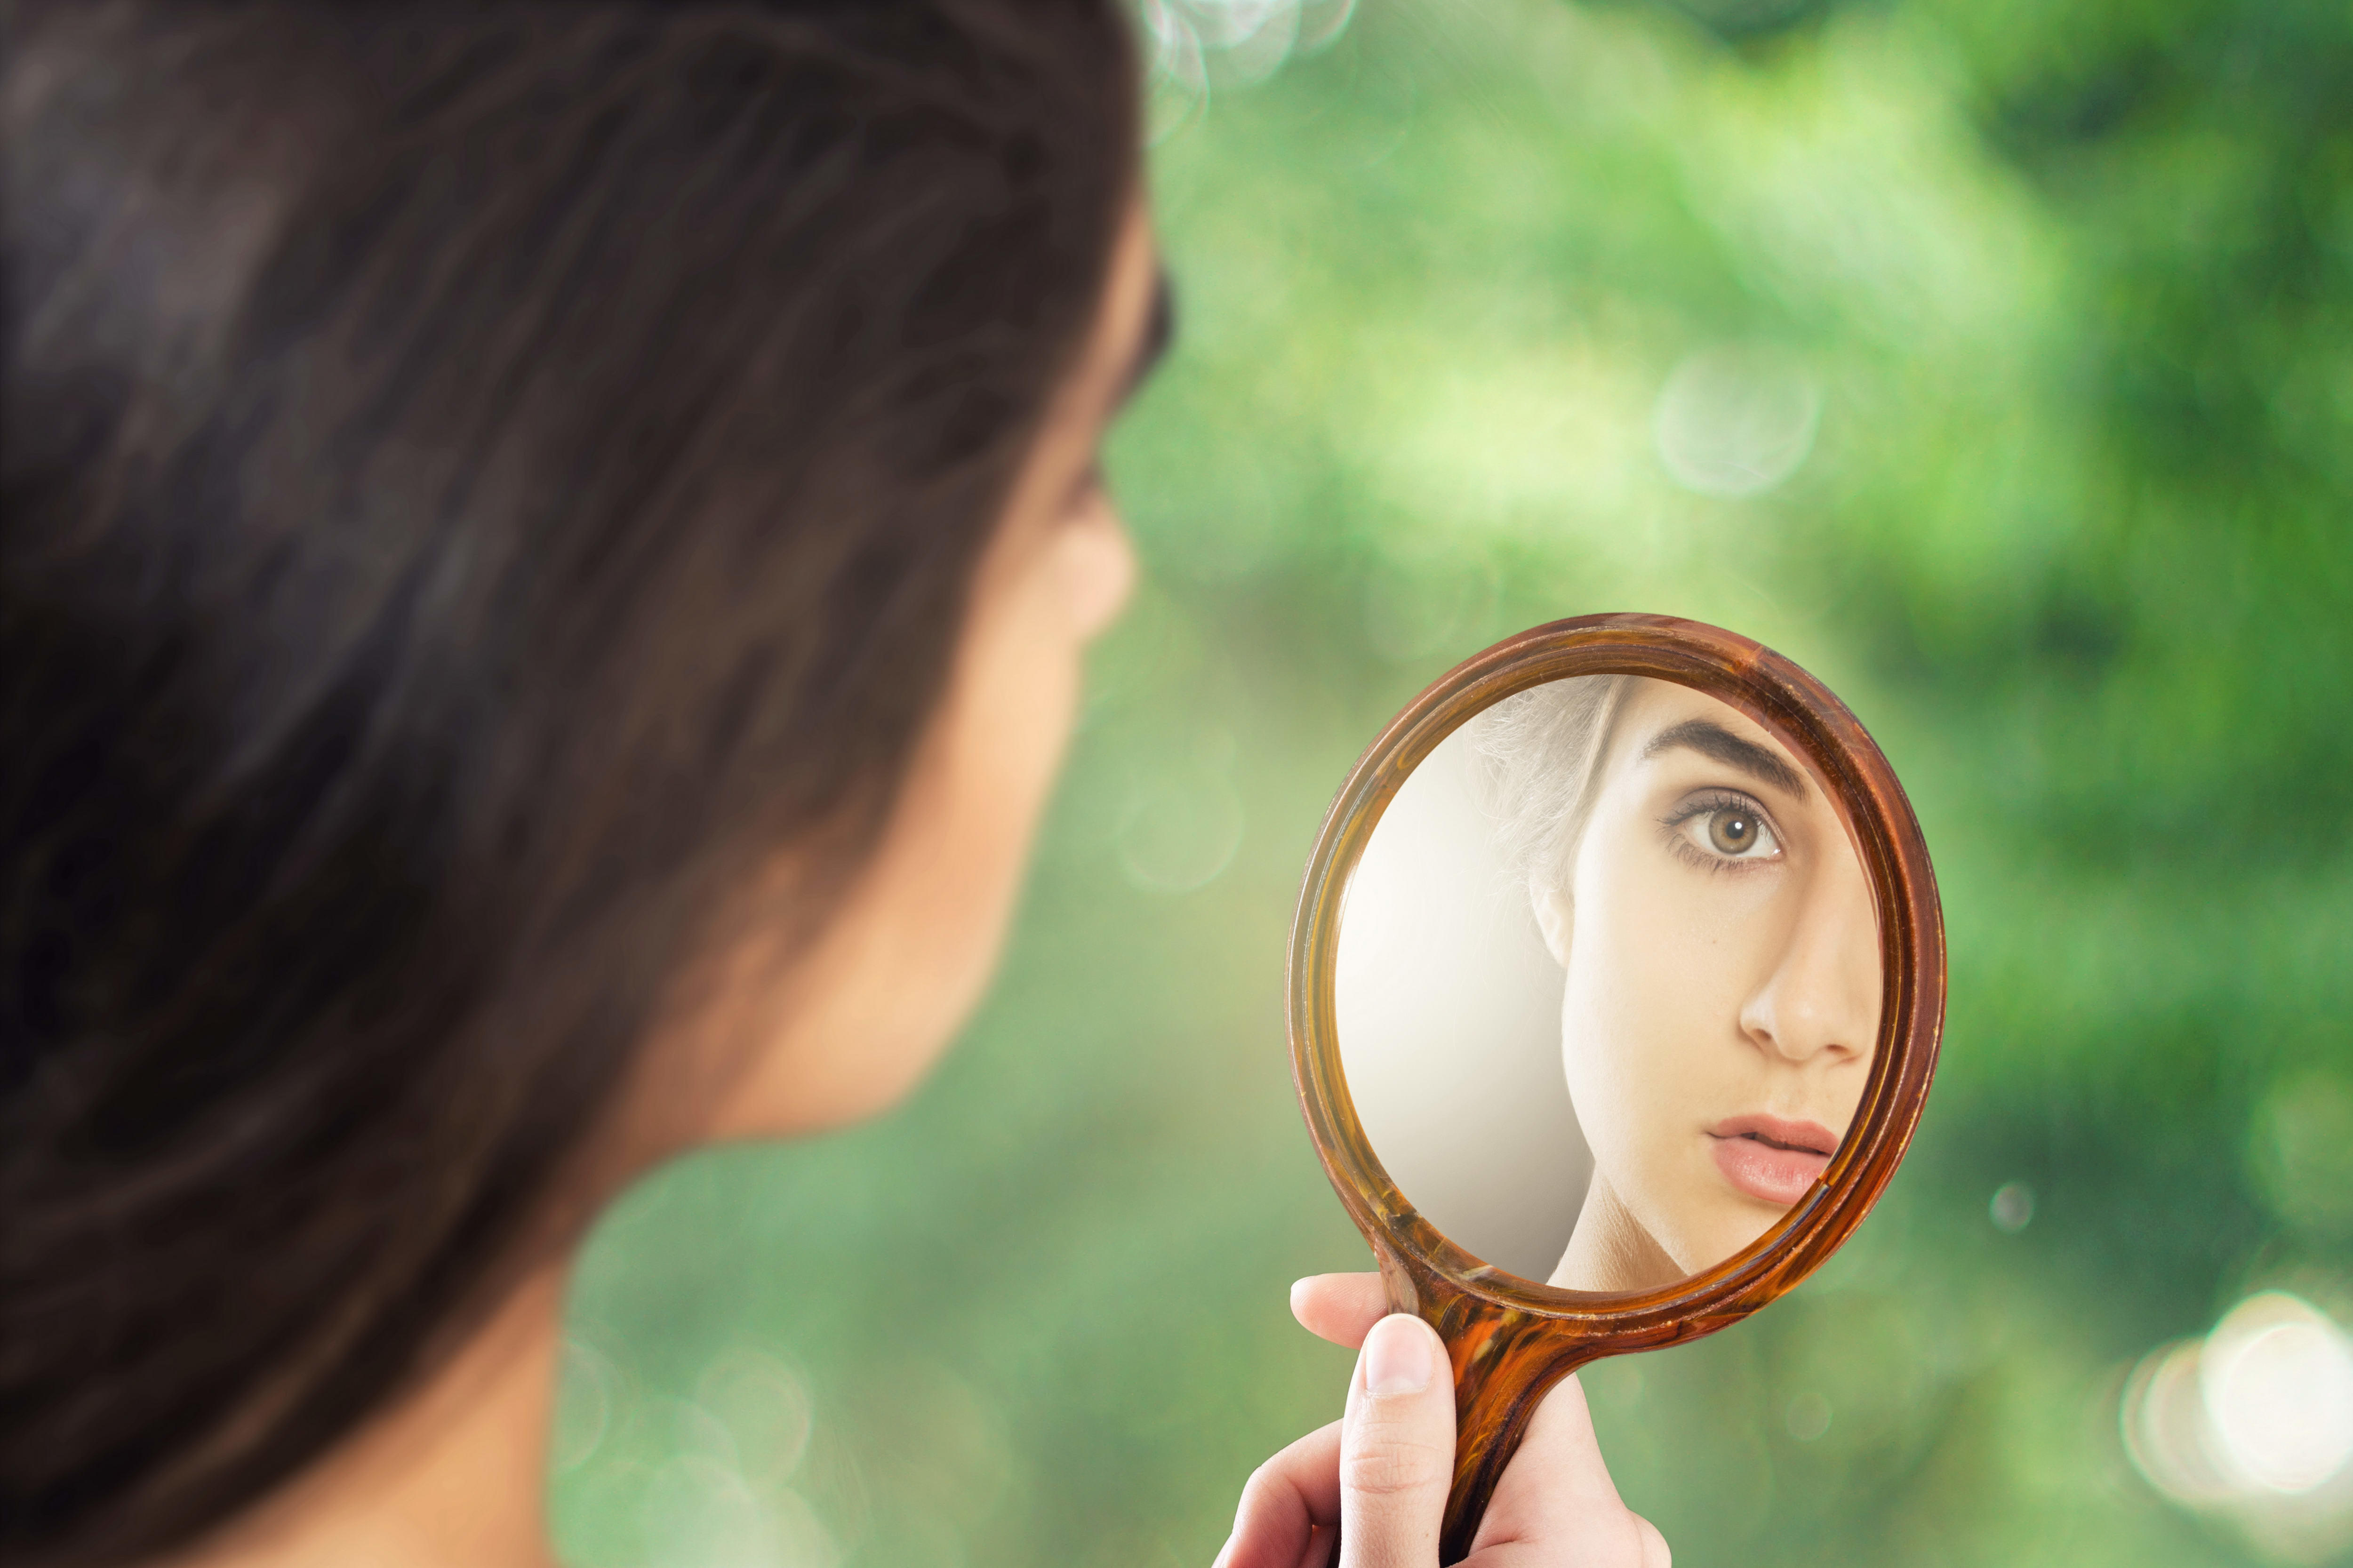 Glimpse of your reflection. Отражение в зеркале. Девушка смотрится в зеркало. Человек смотрится в зеркало. Смотреться в зеркало.